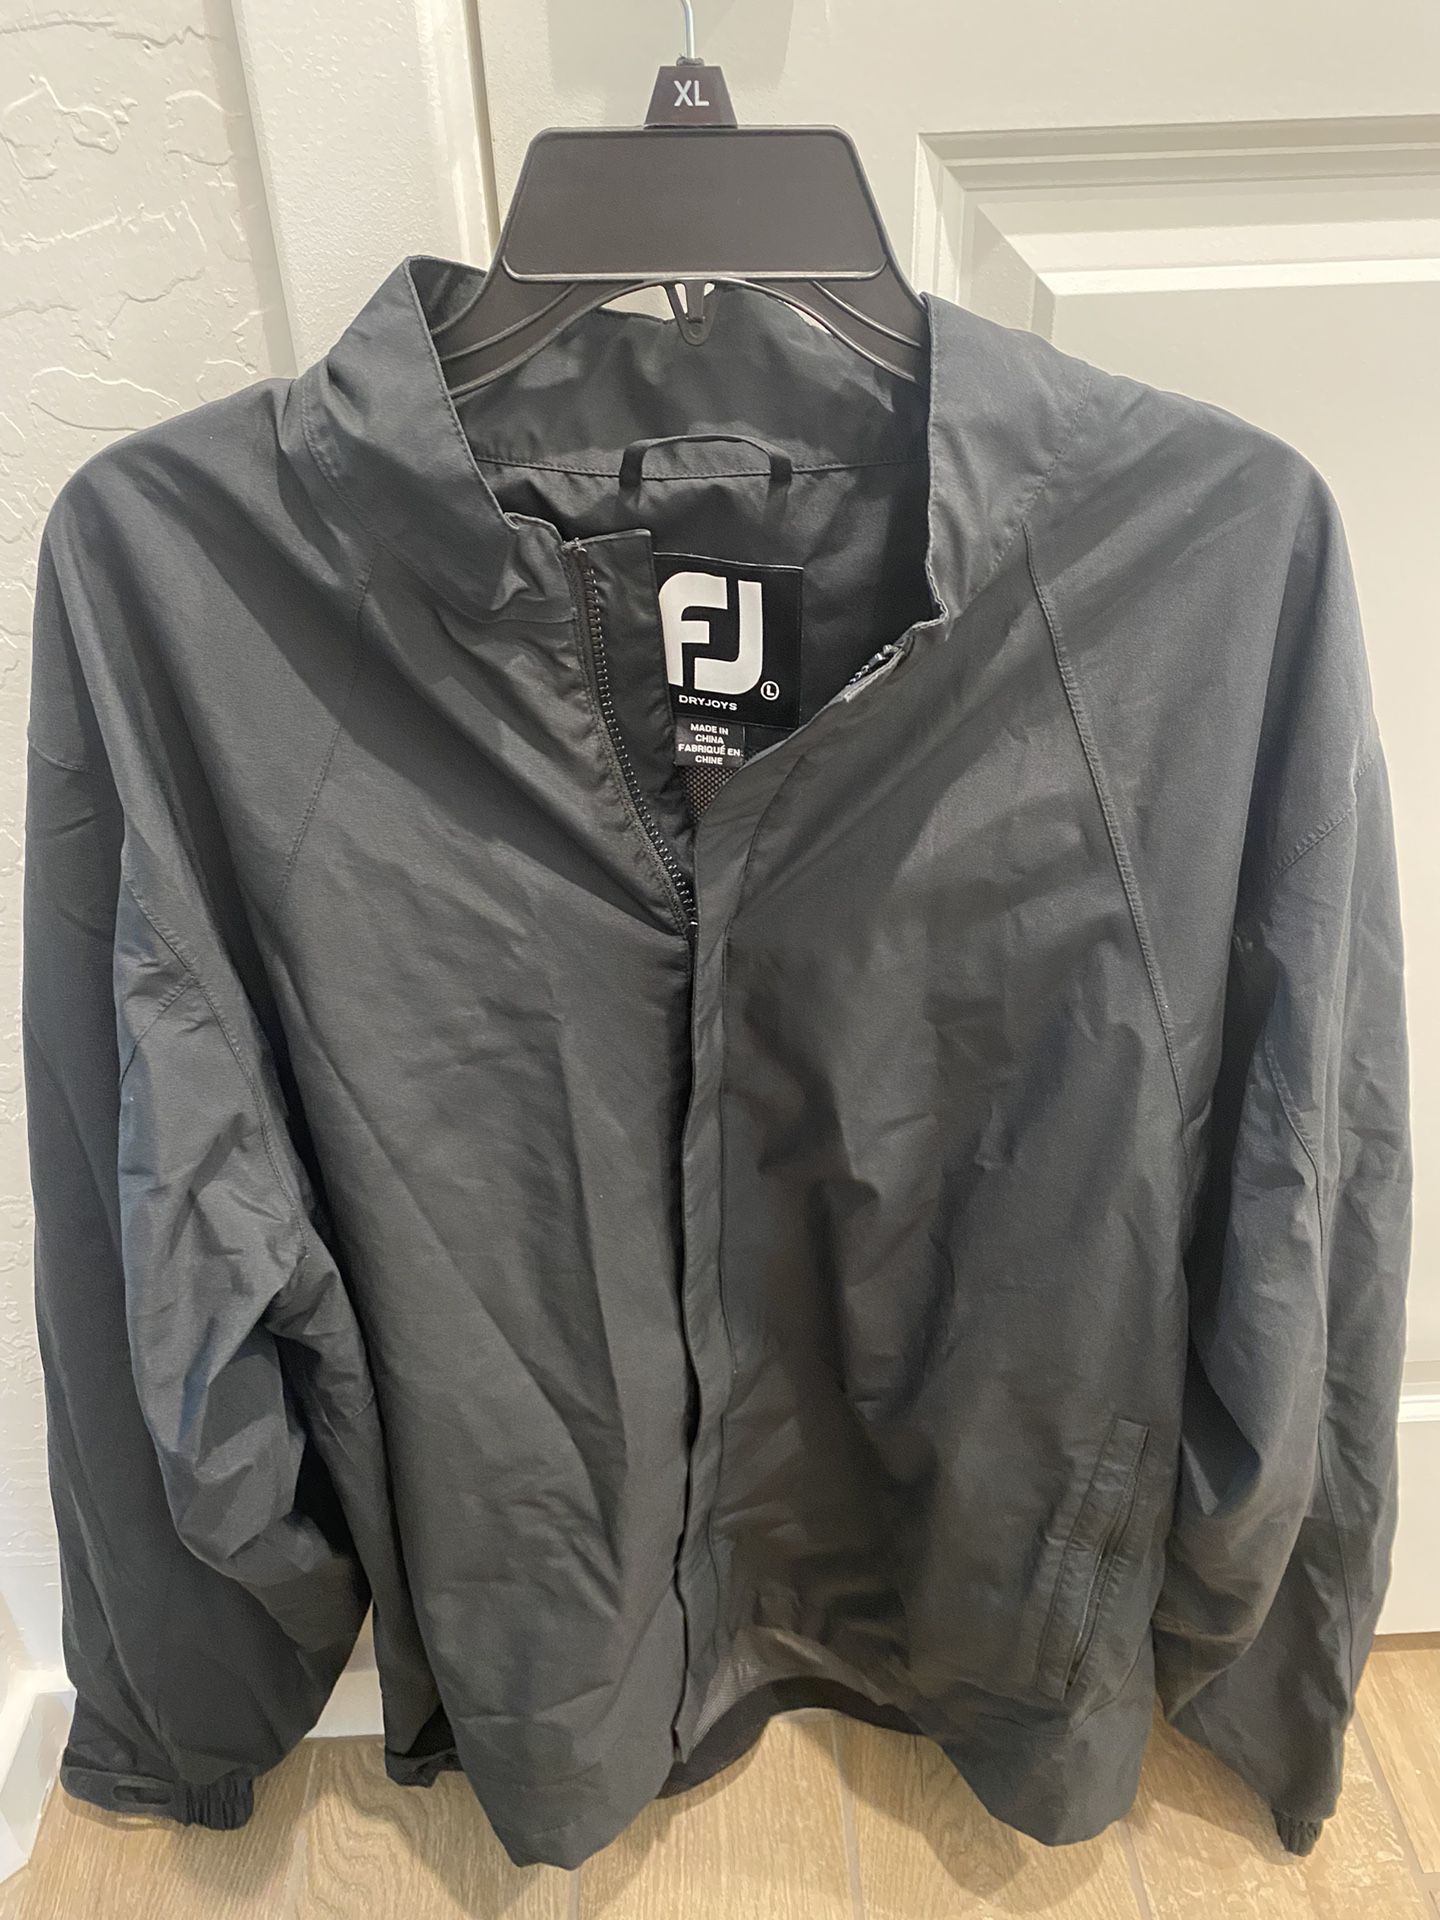 FJ Rain jacket